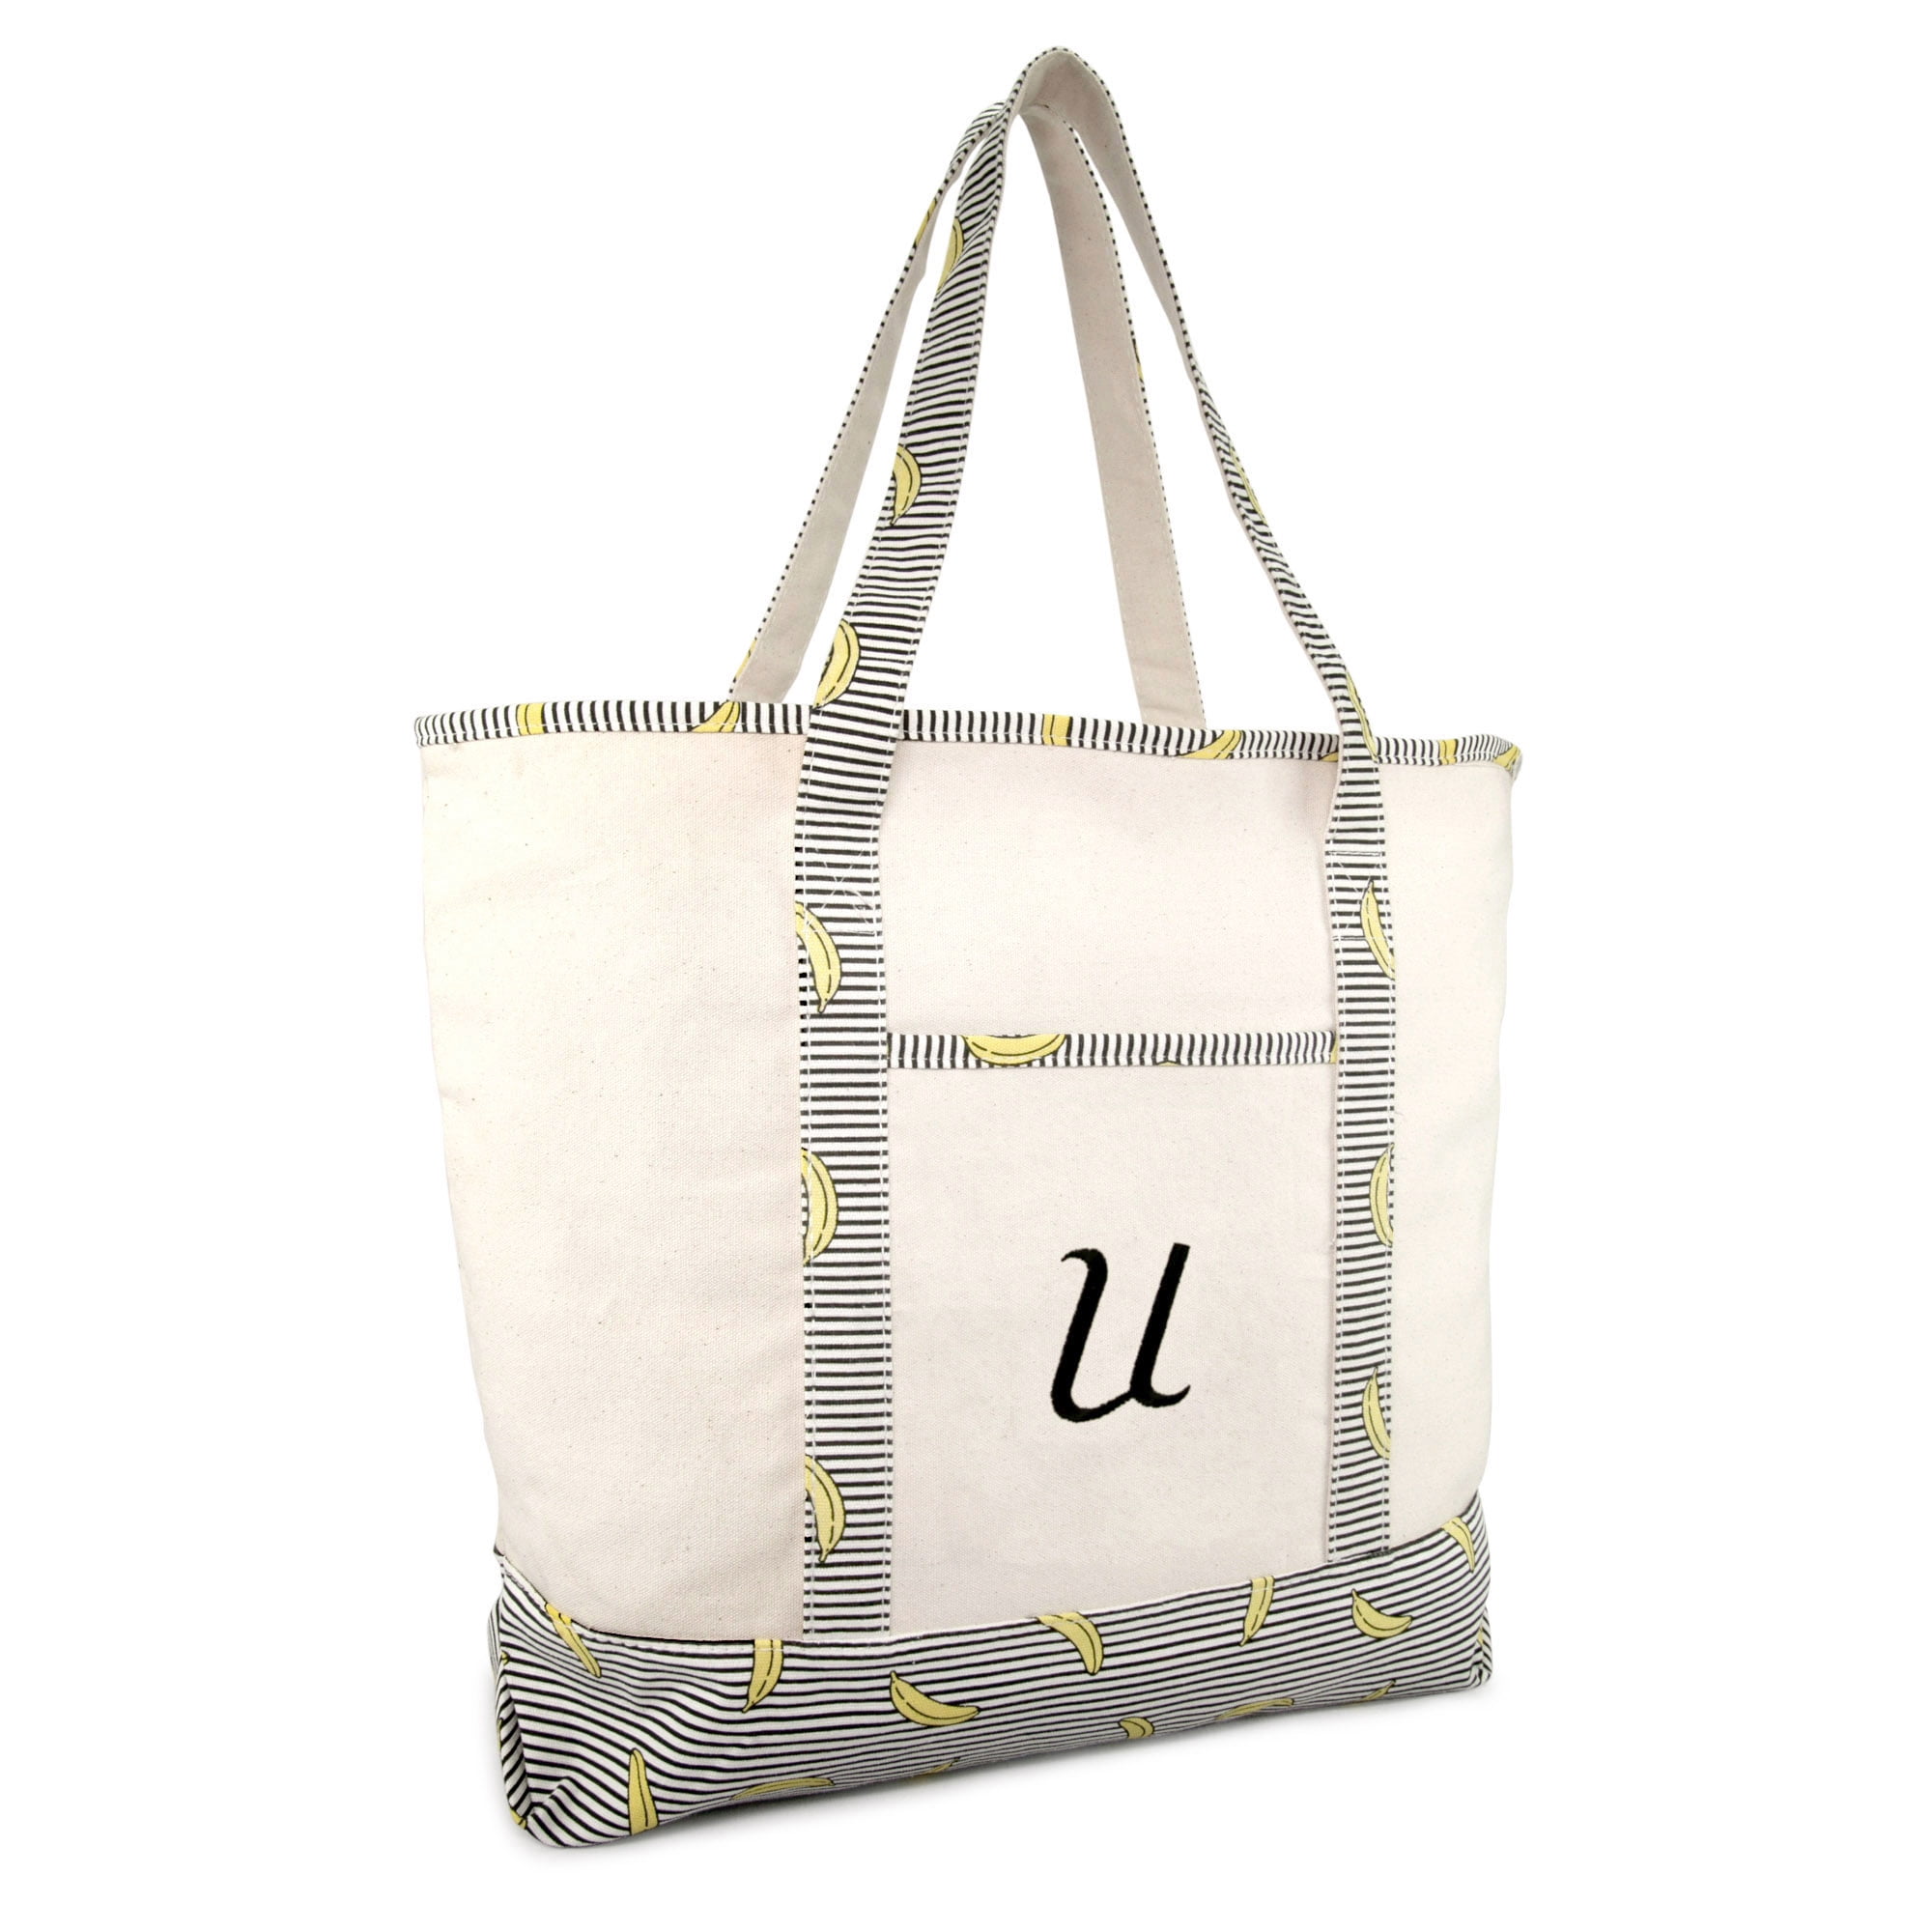  DALIX 20 E-Initial Tote Bag Monogrammed Cotton Canvas